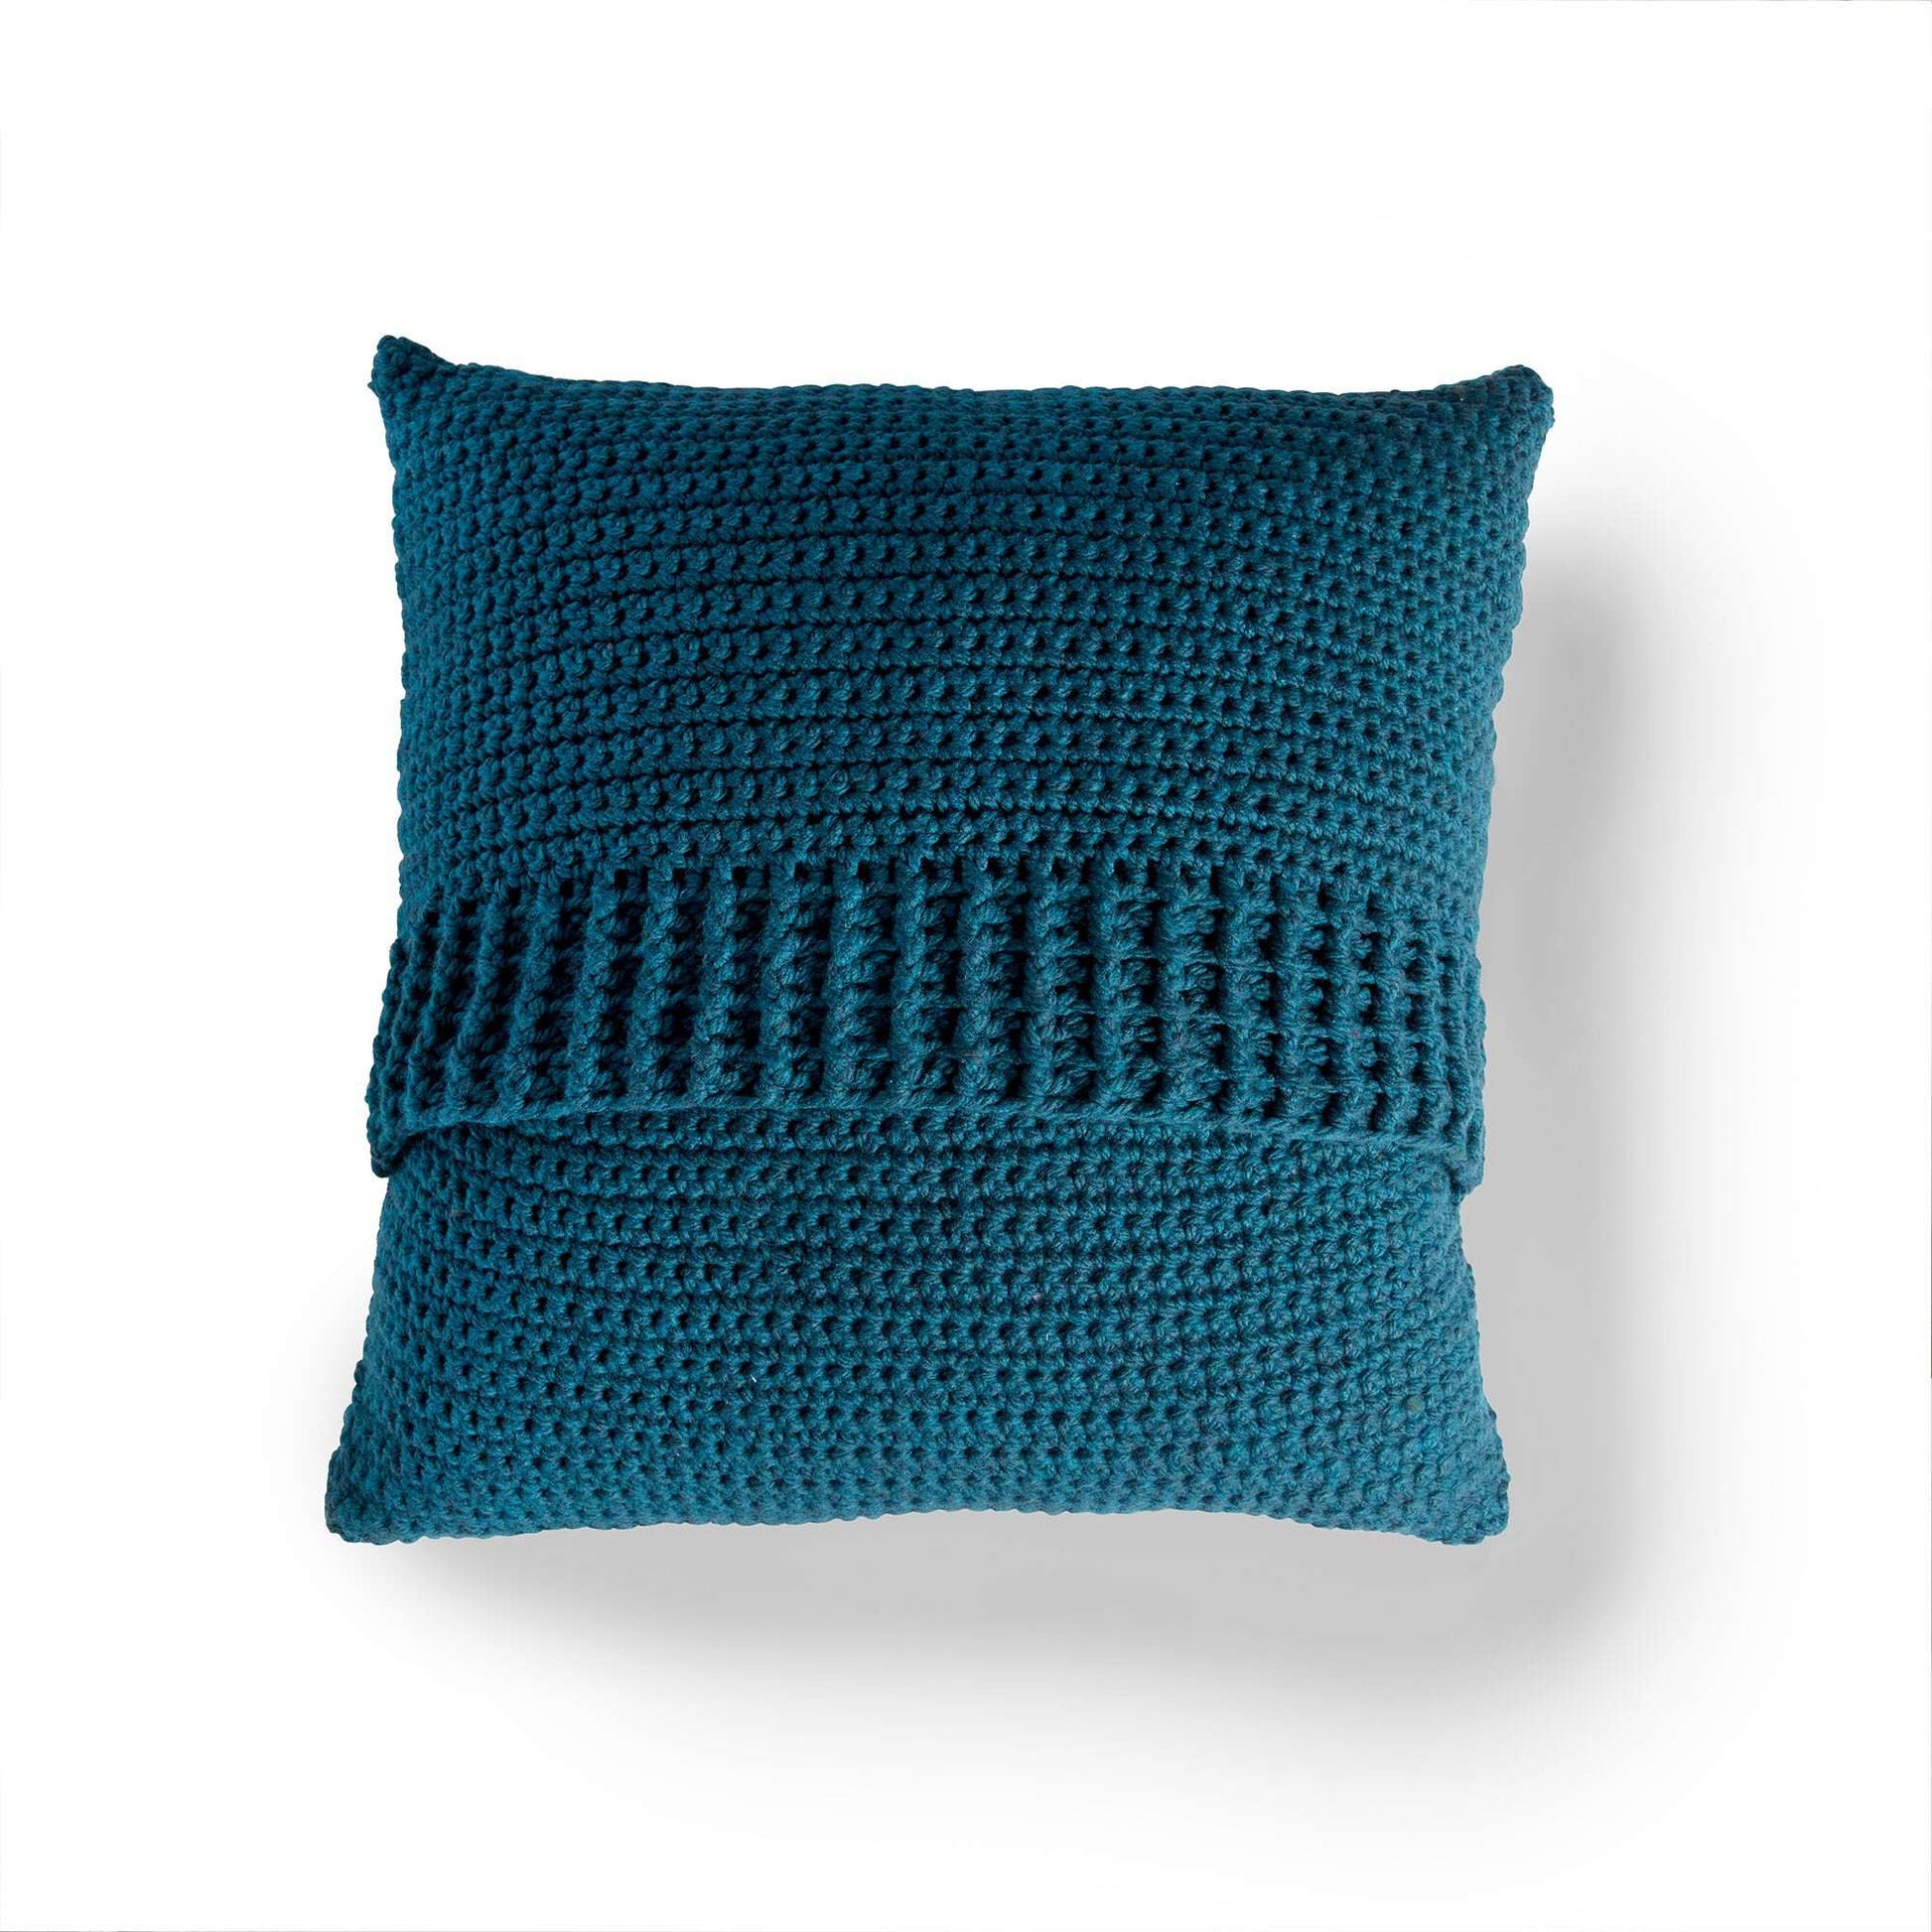 Free Bernat Crossed Squares Crochet Pillow Pattern